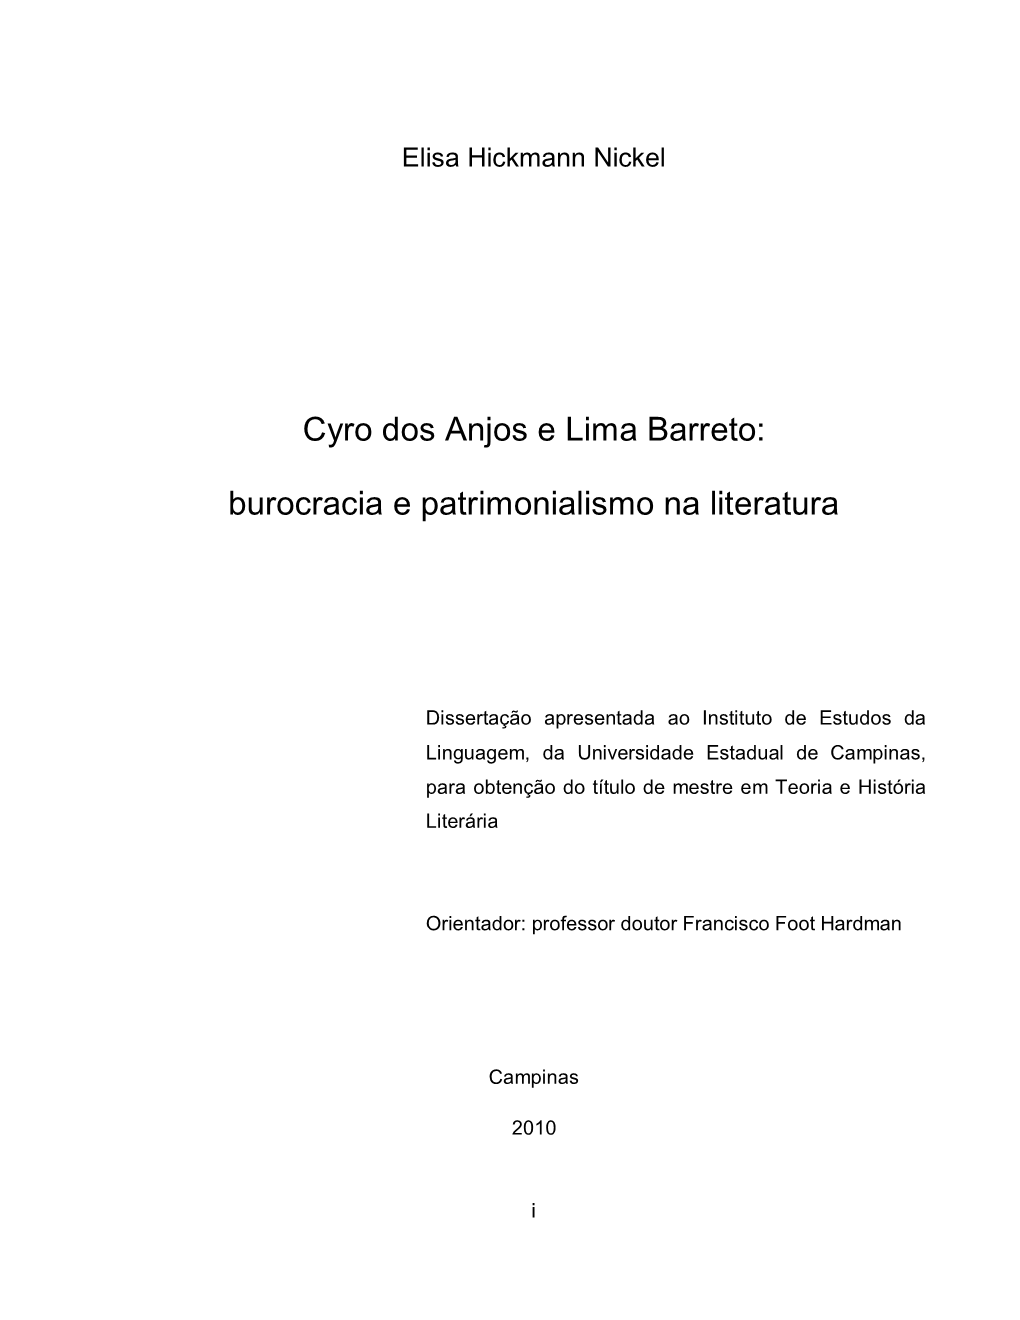 Cyro Dos Anjos E Lima Barreto: Burocracia E Patrimonialismo Na Literatura